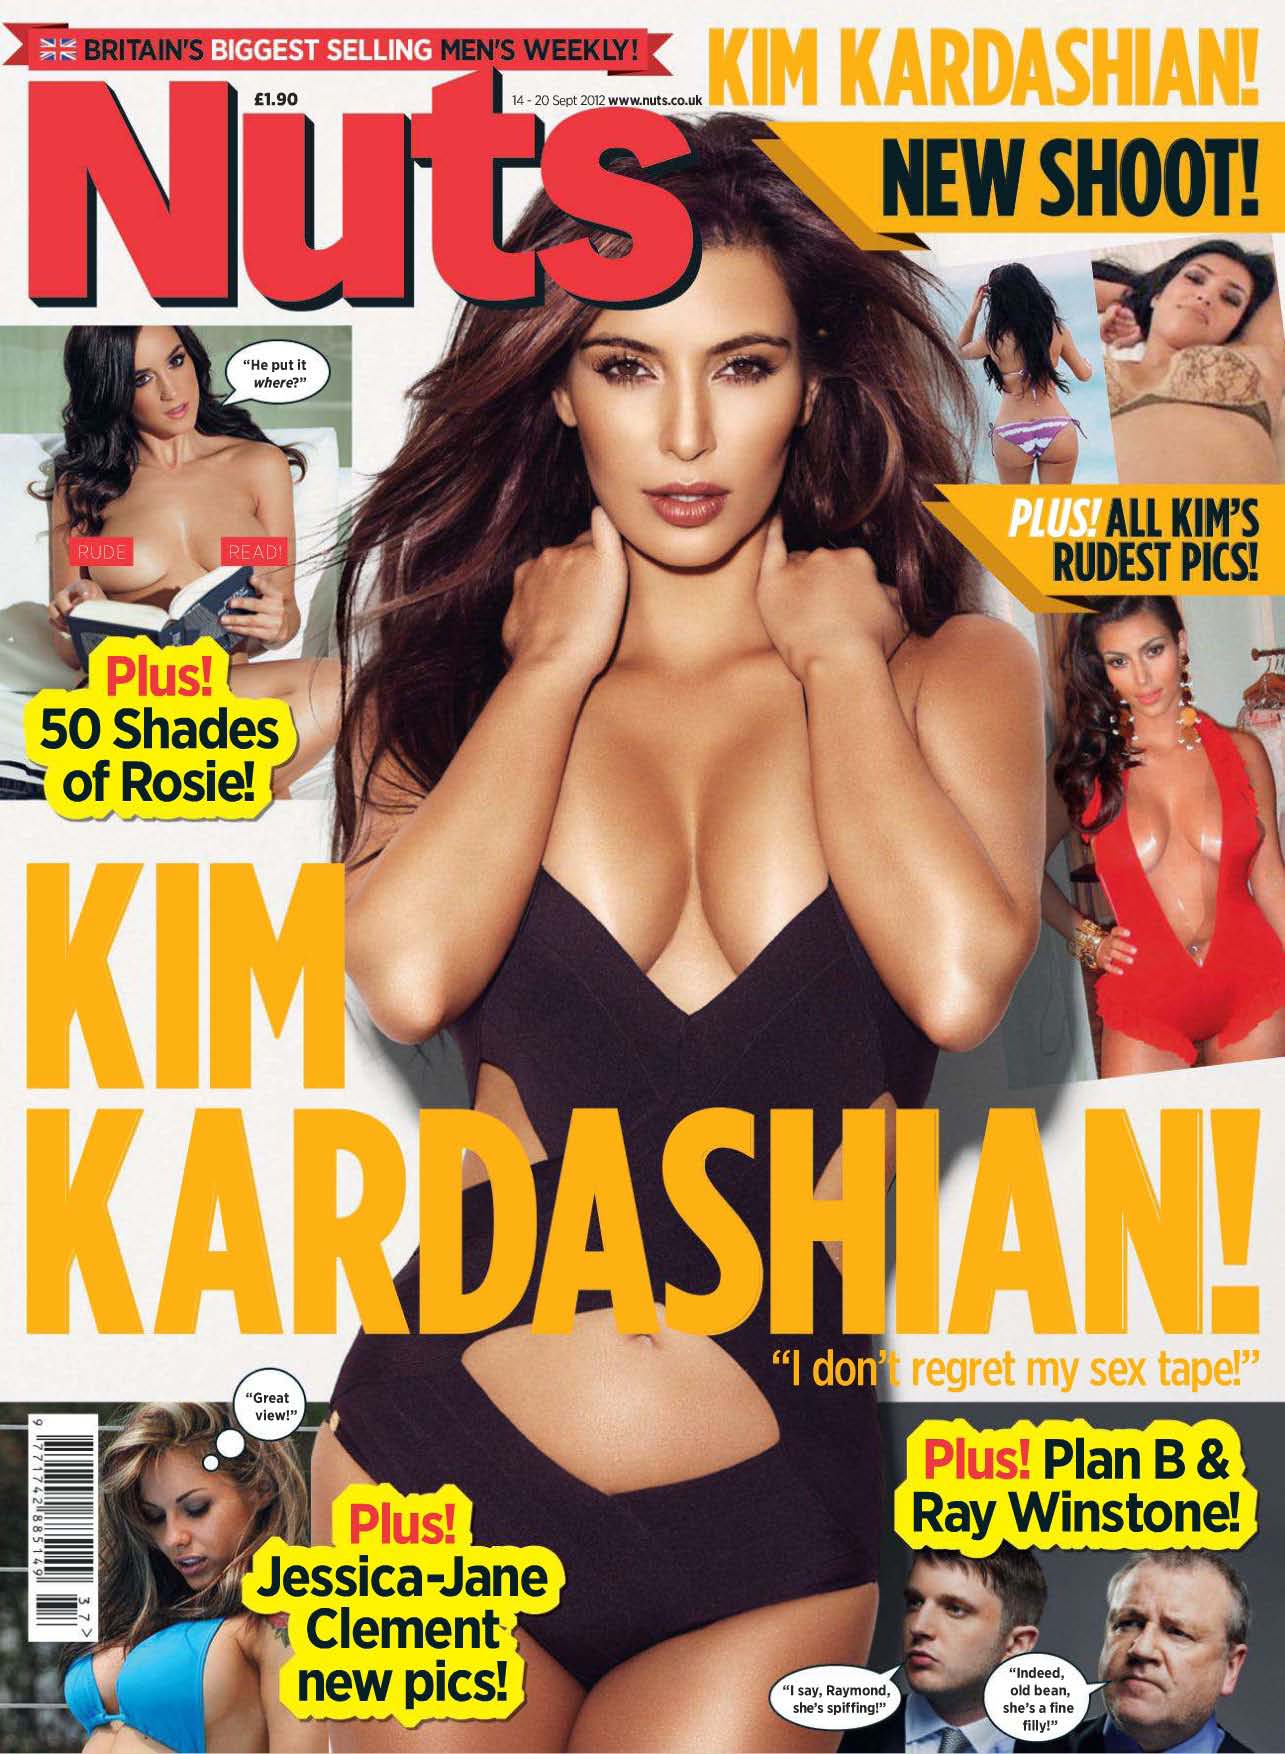 Kim Kardashian Photoshoot for Nuts Magazine Cover 2012